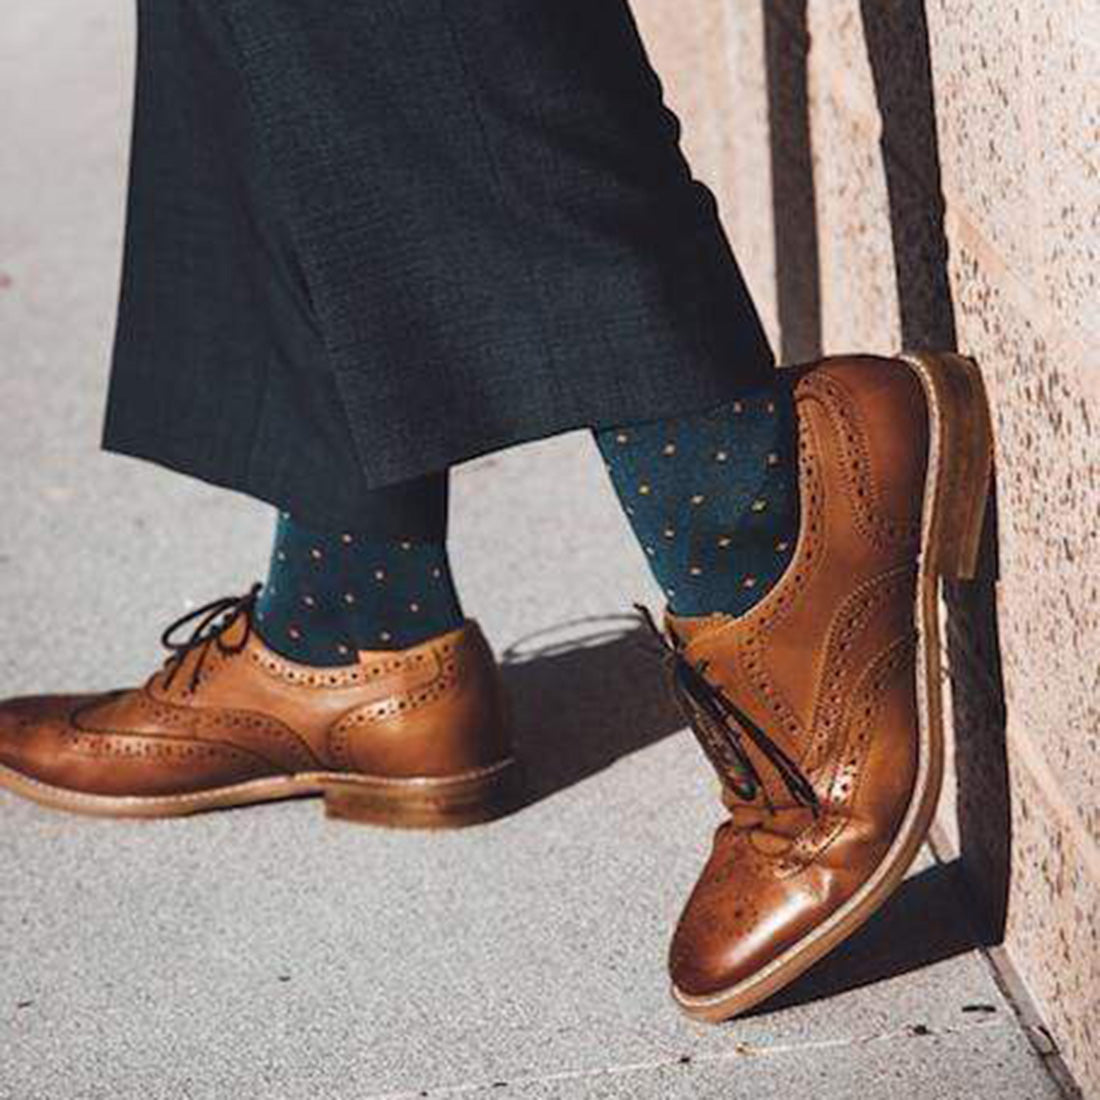 socks-spotted-orange-bamboo-socks-comfort-cuff-2.jpg